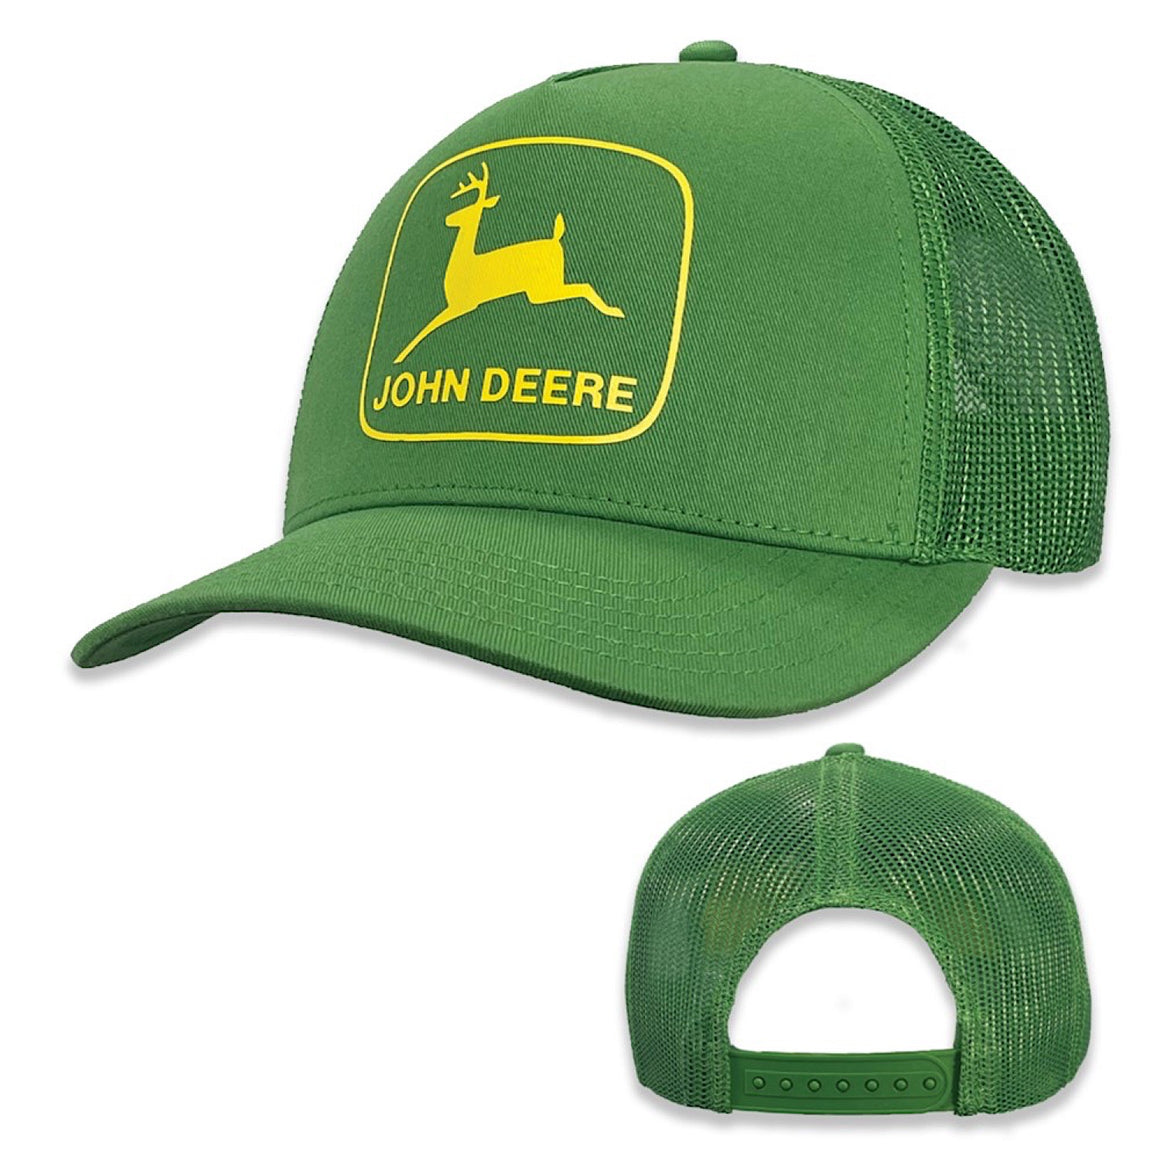 John Deere Twill/Mesh Trucker Cap - Green/Yellow Logo